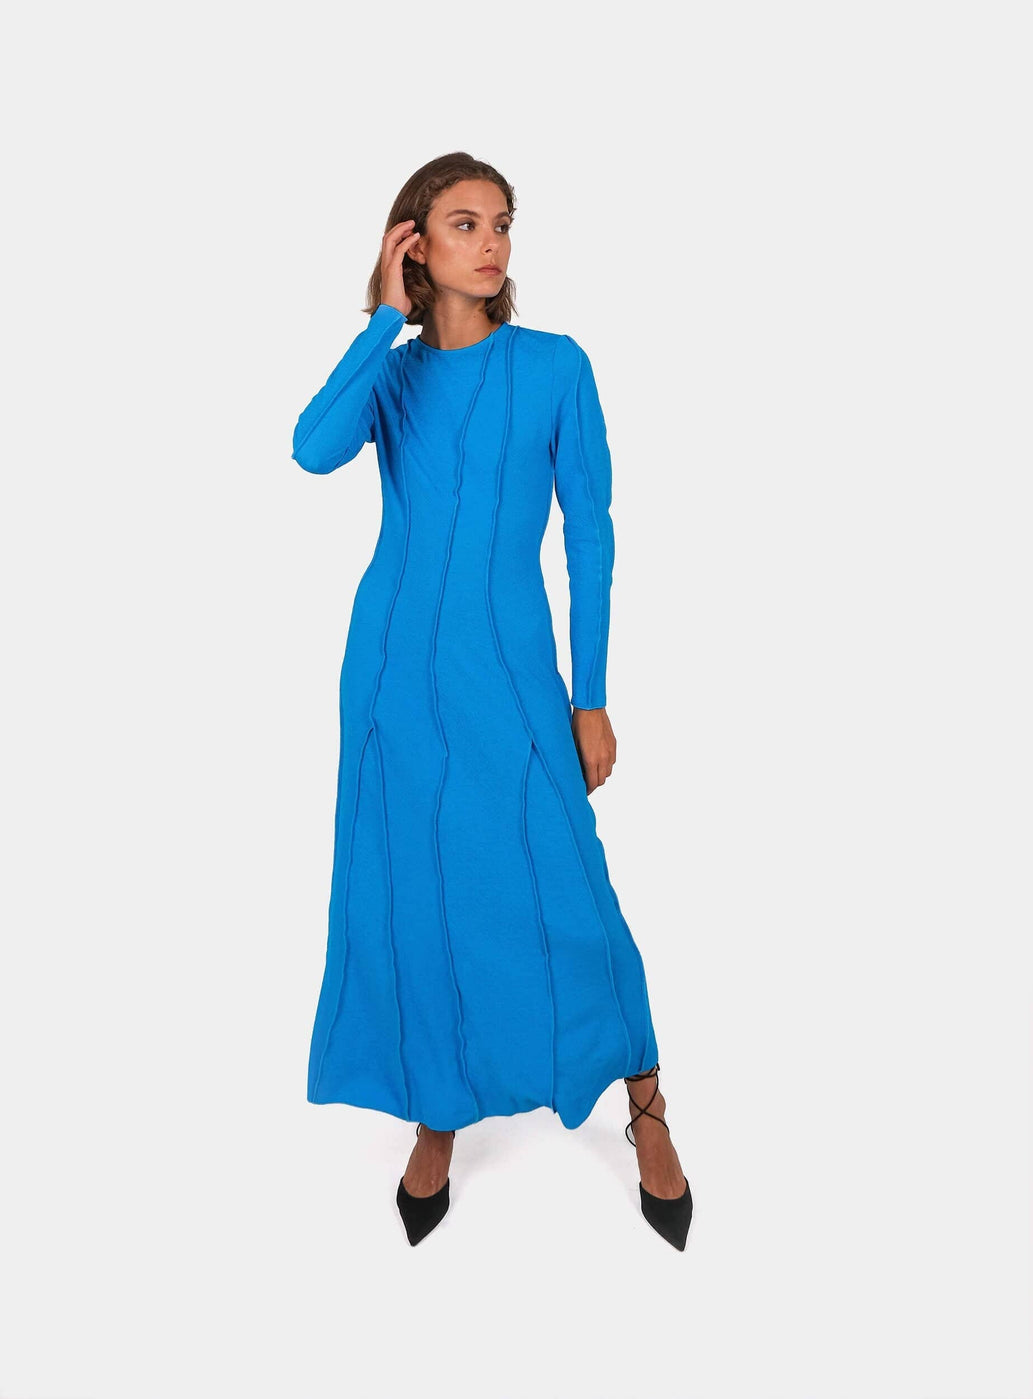 LAAGAM - PROVENÇA BLUE DRESS